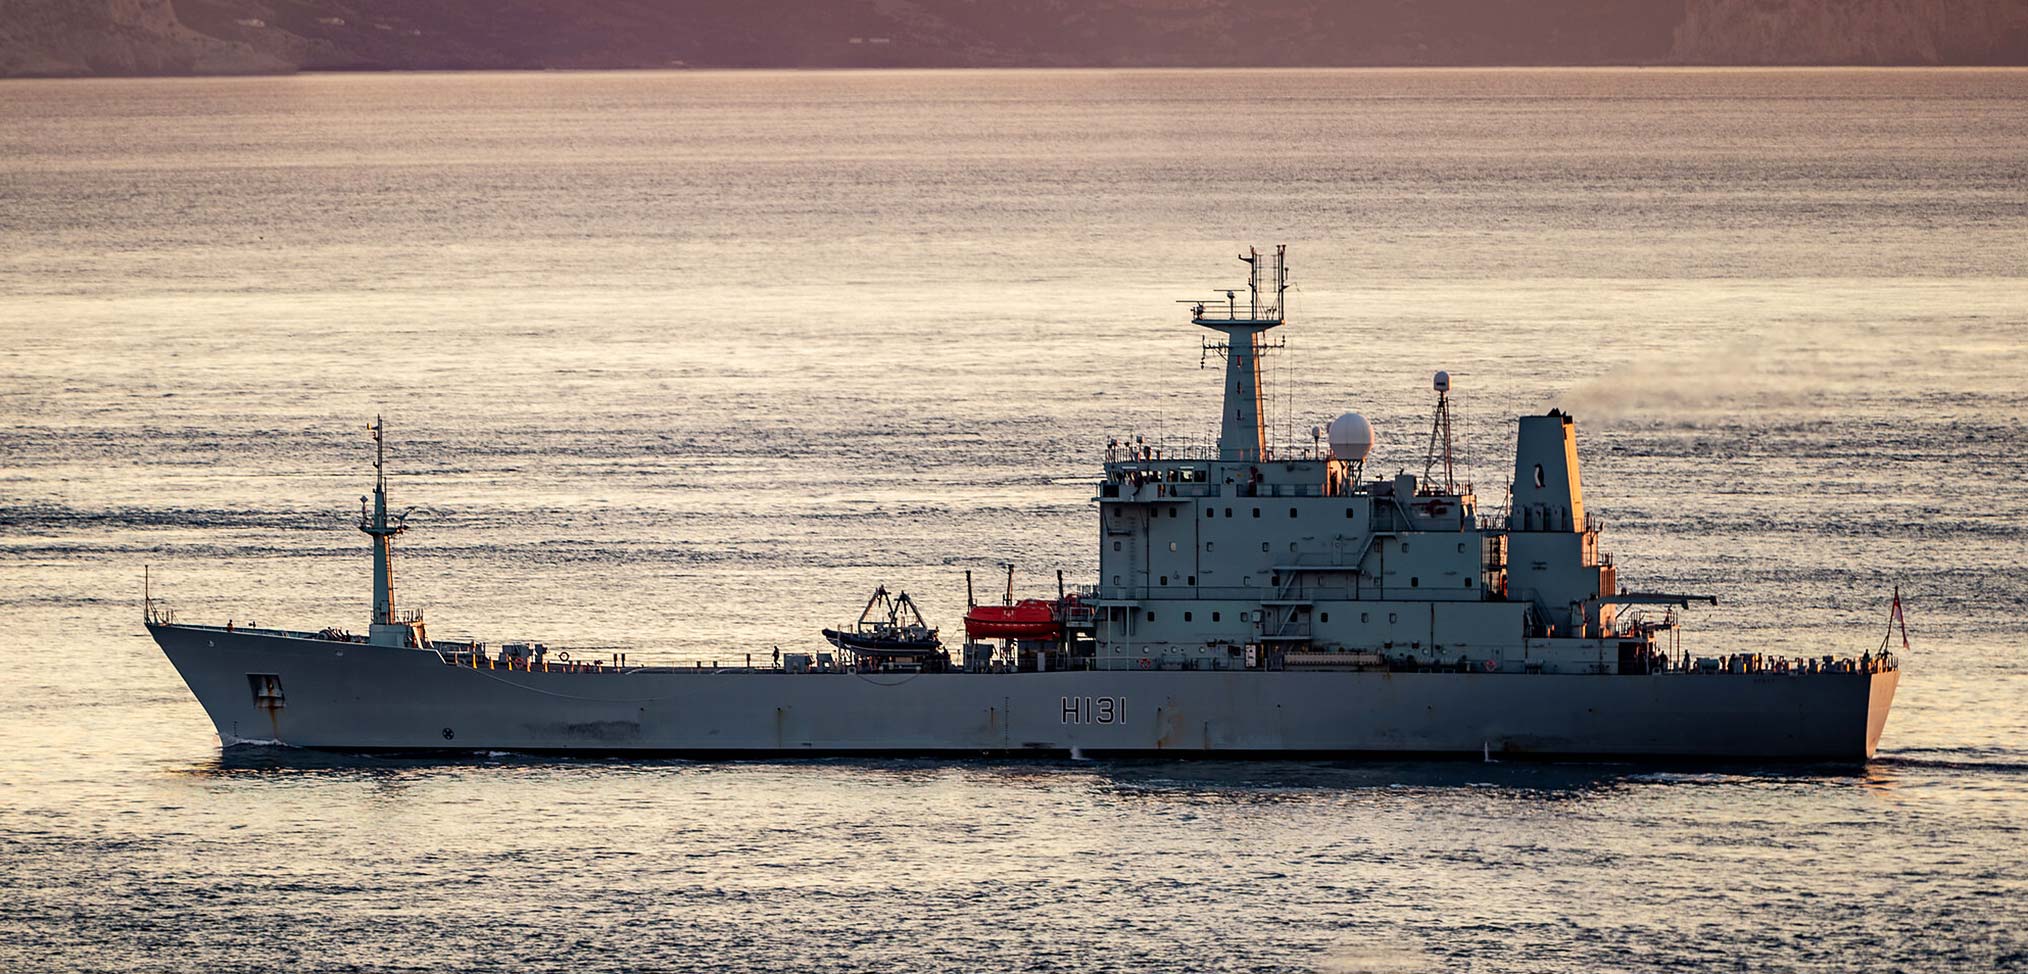 Royal Navy’s ocean survey vessel HMS Scott extended in service